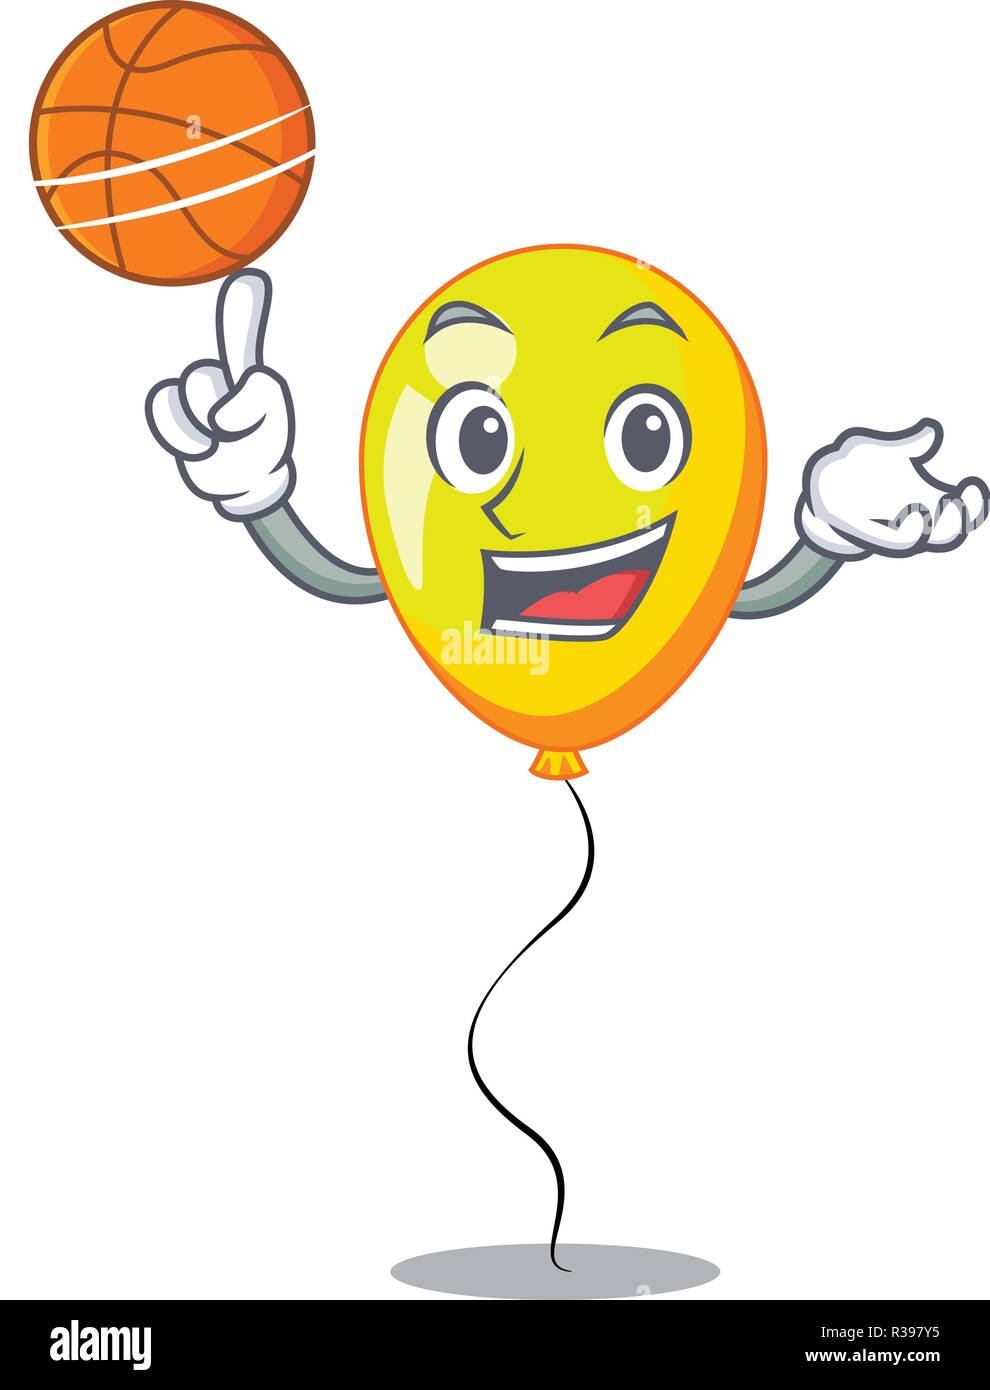 With basketball yellow balloon cartoon in shape illustration Stock Vector